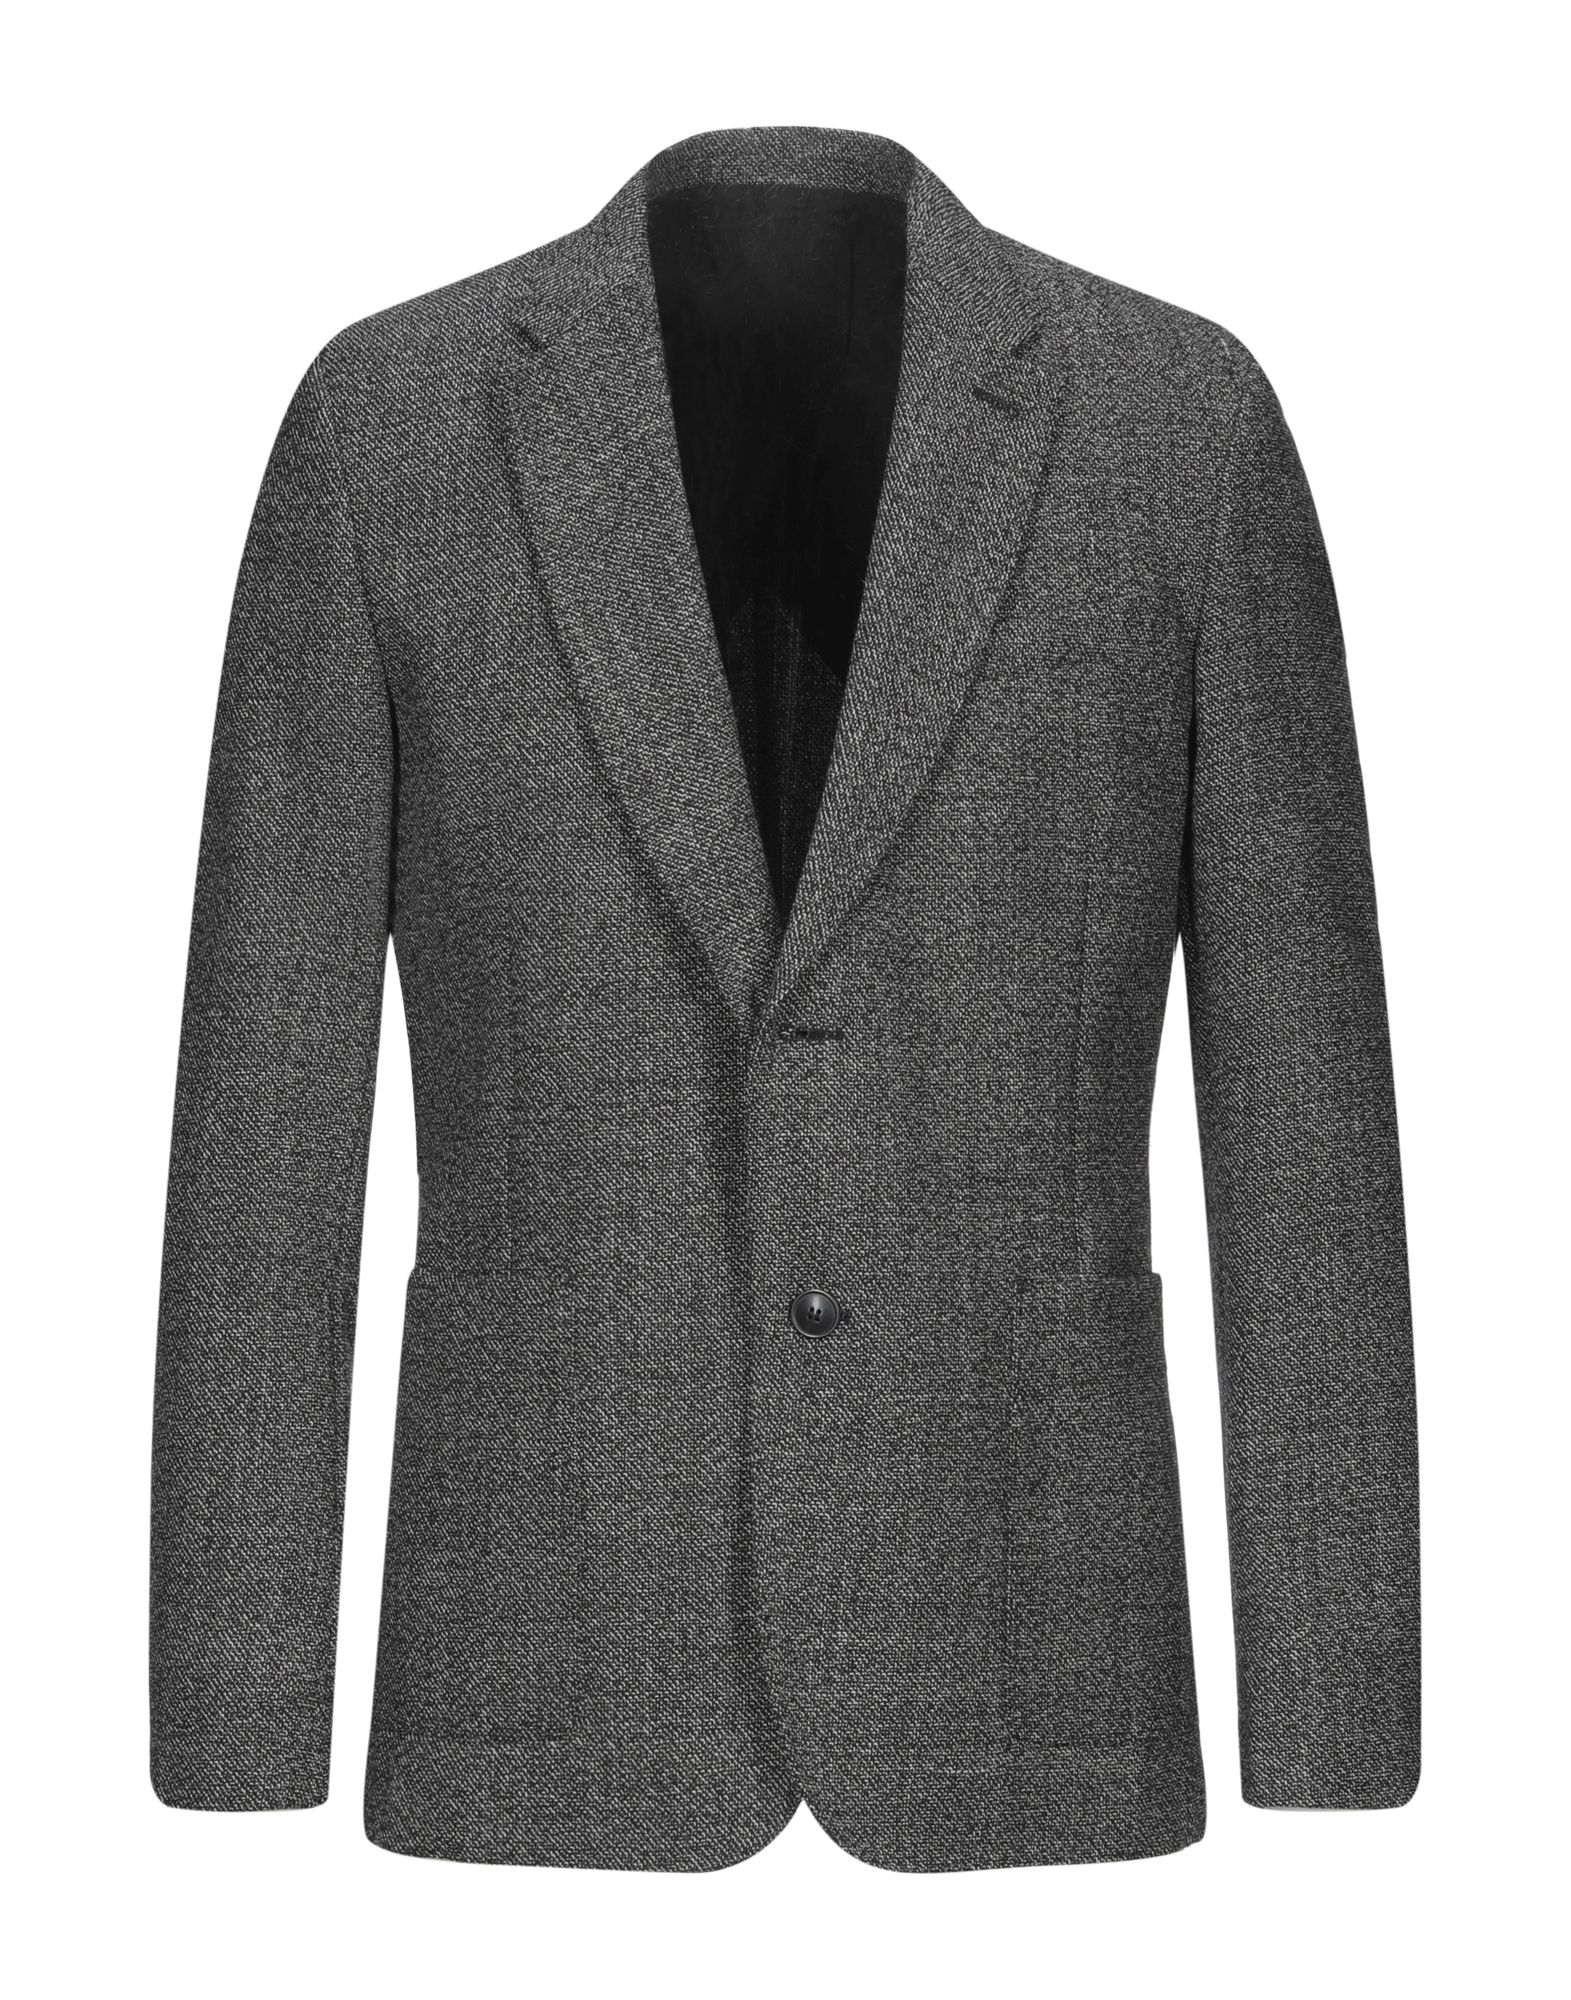 AMI ALEXANDRE MATTIUSSI Suit jackets - Item 49604173